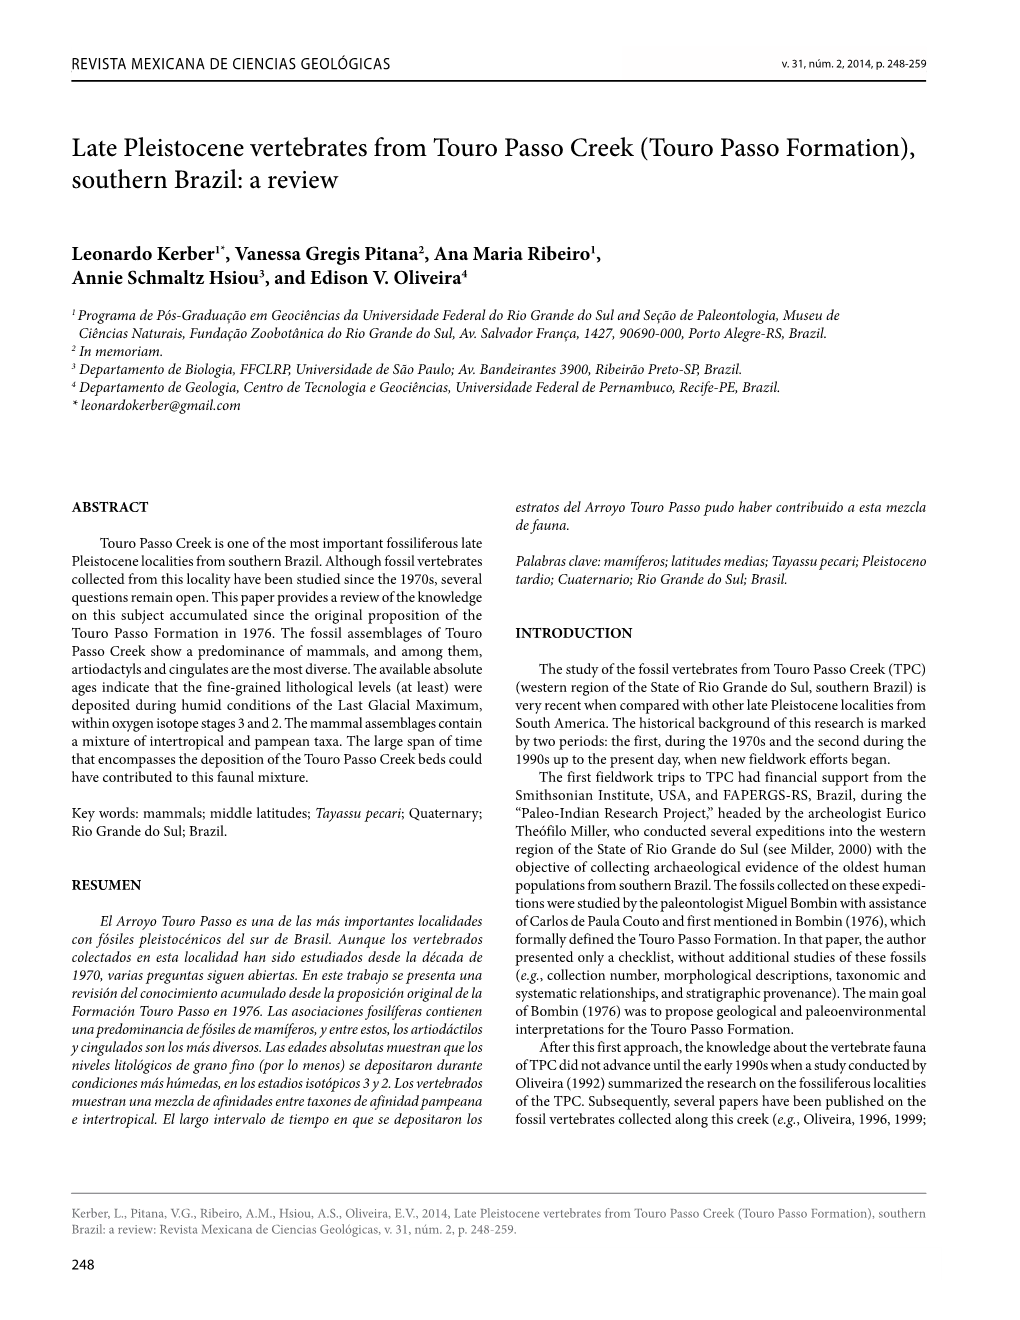 Late Pleistocene Vertebrates from Touro Passo Creek (Touro Passo Formation), Southern Brazil: a Review